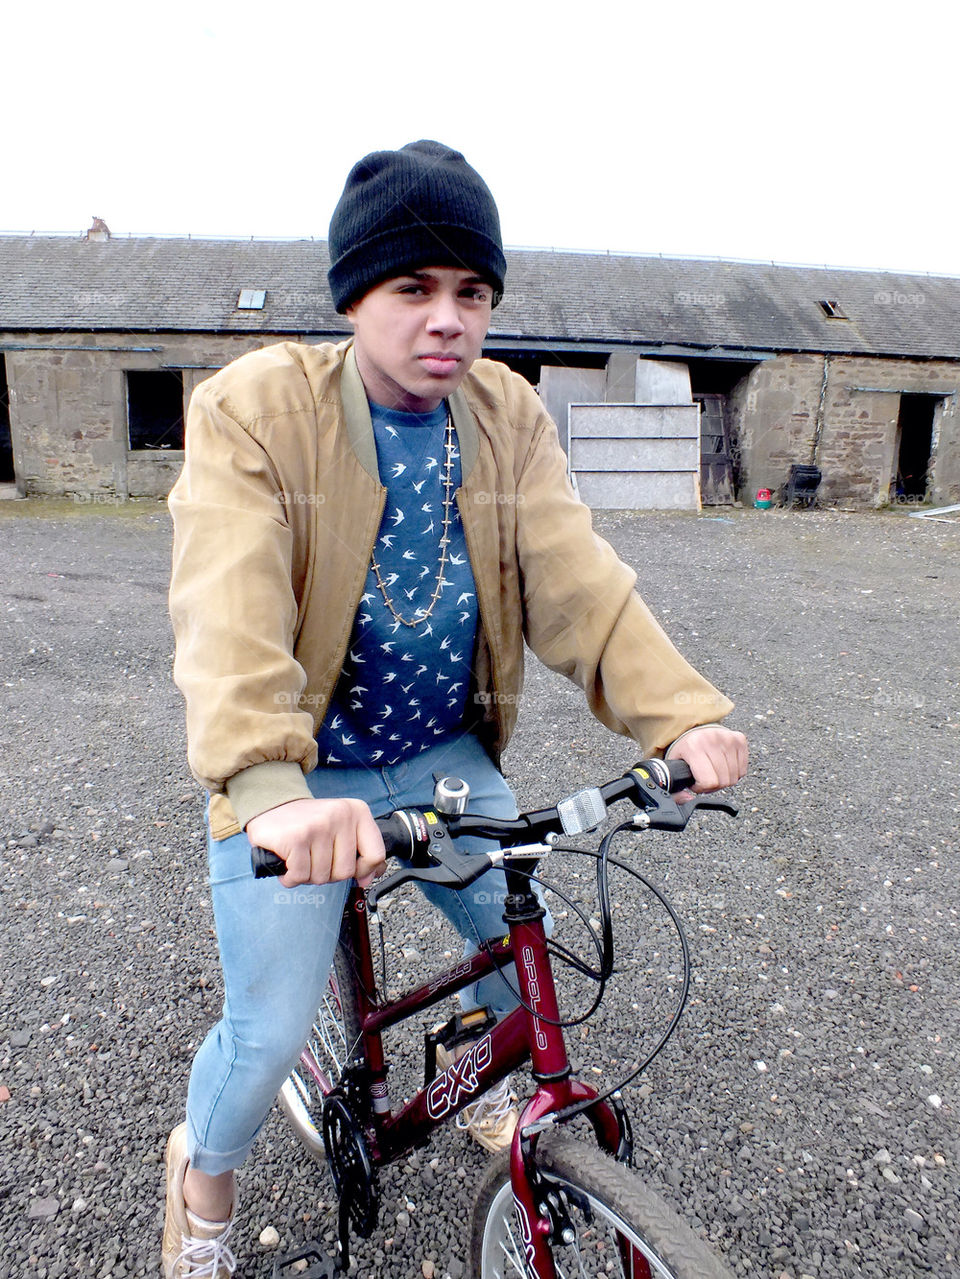 Teenager on small bike